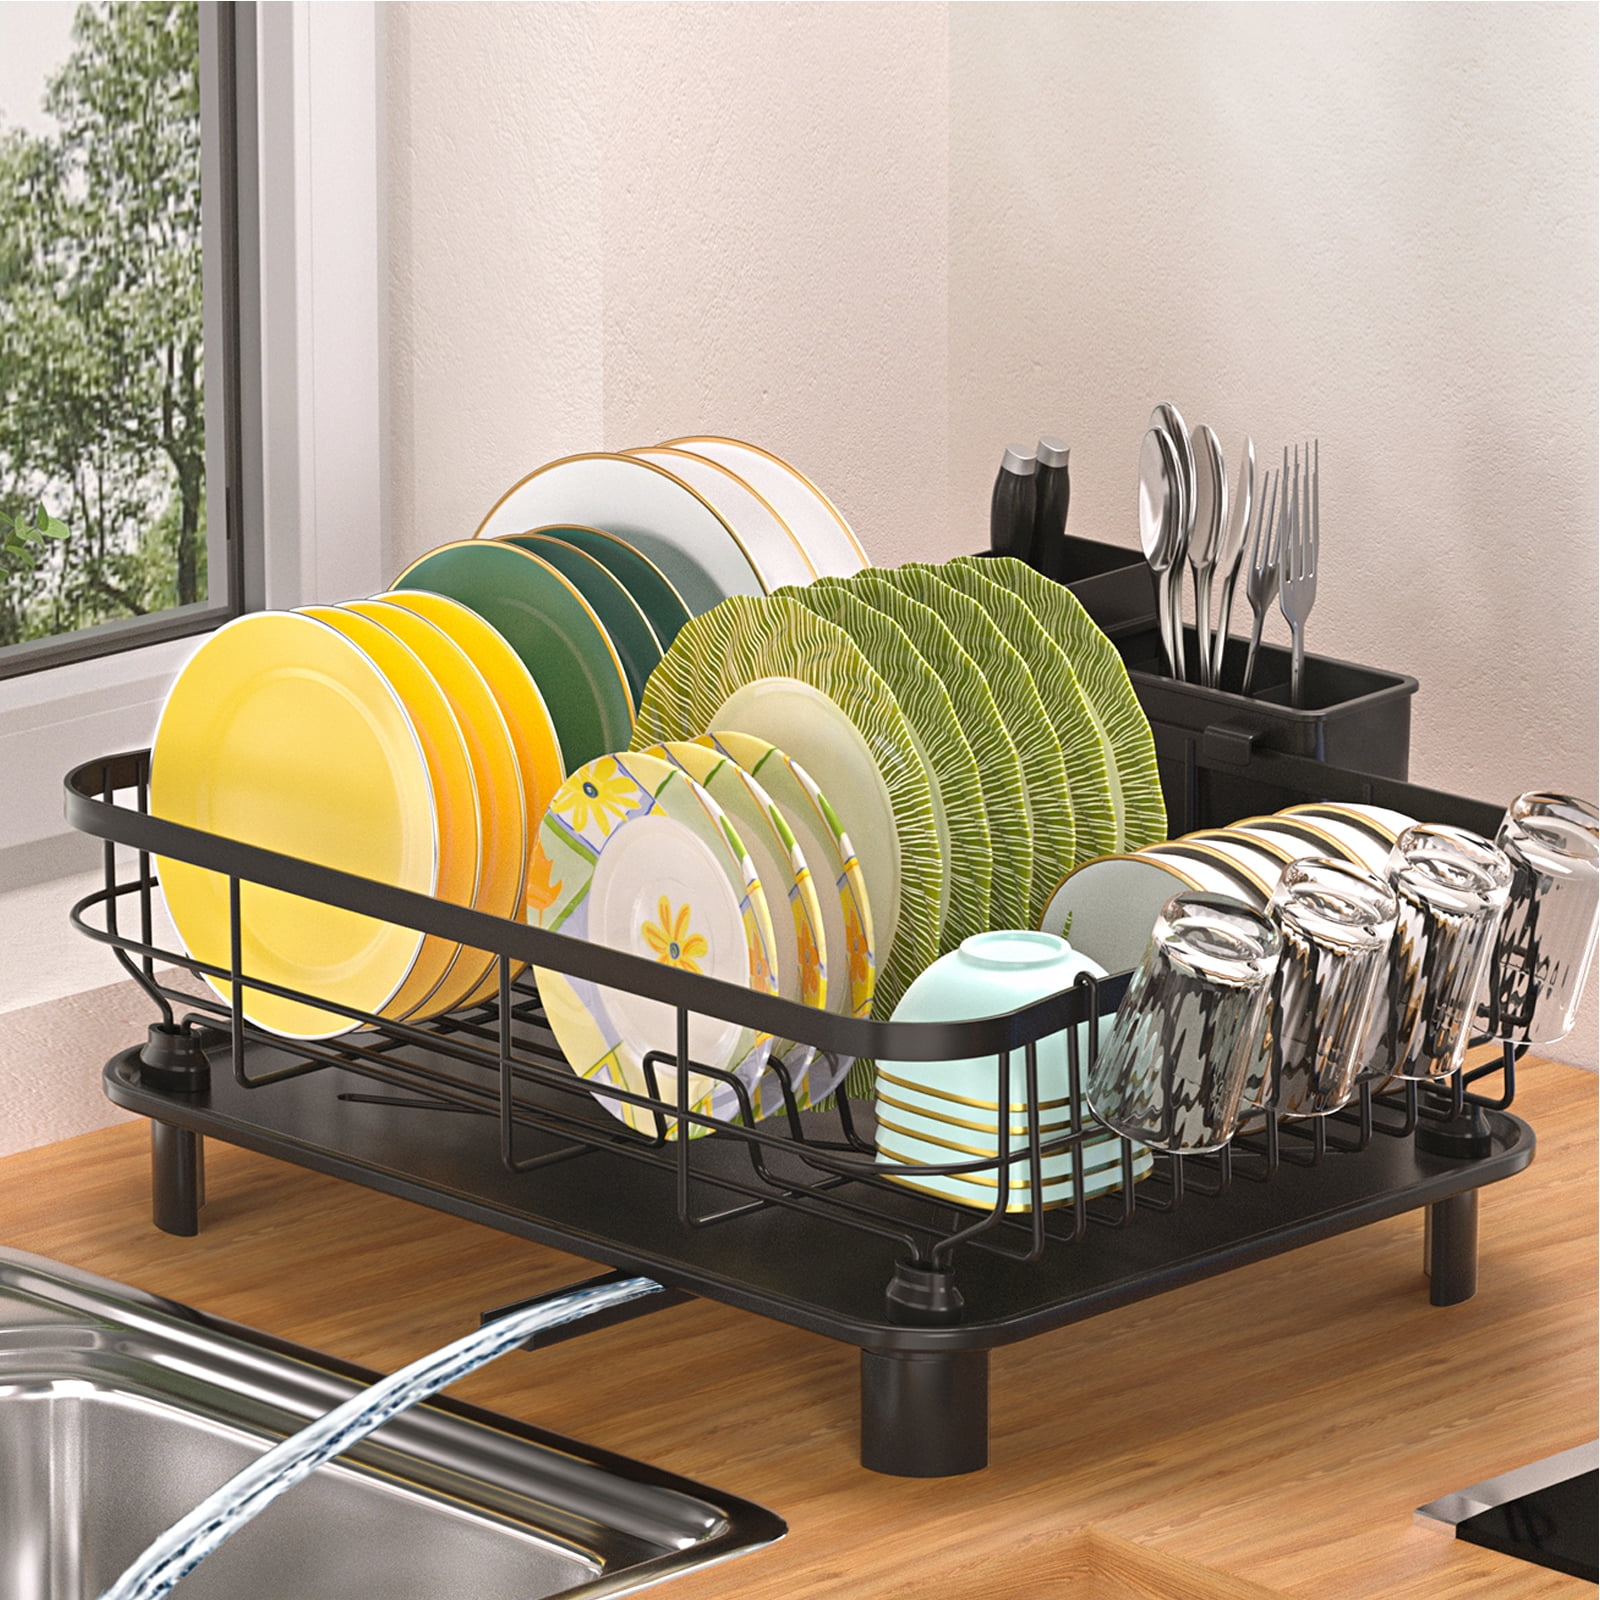 Large Dish Drying Rack, Dish Racks For Kitchen Counter, Dish